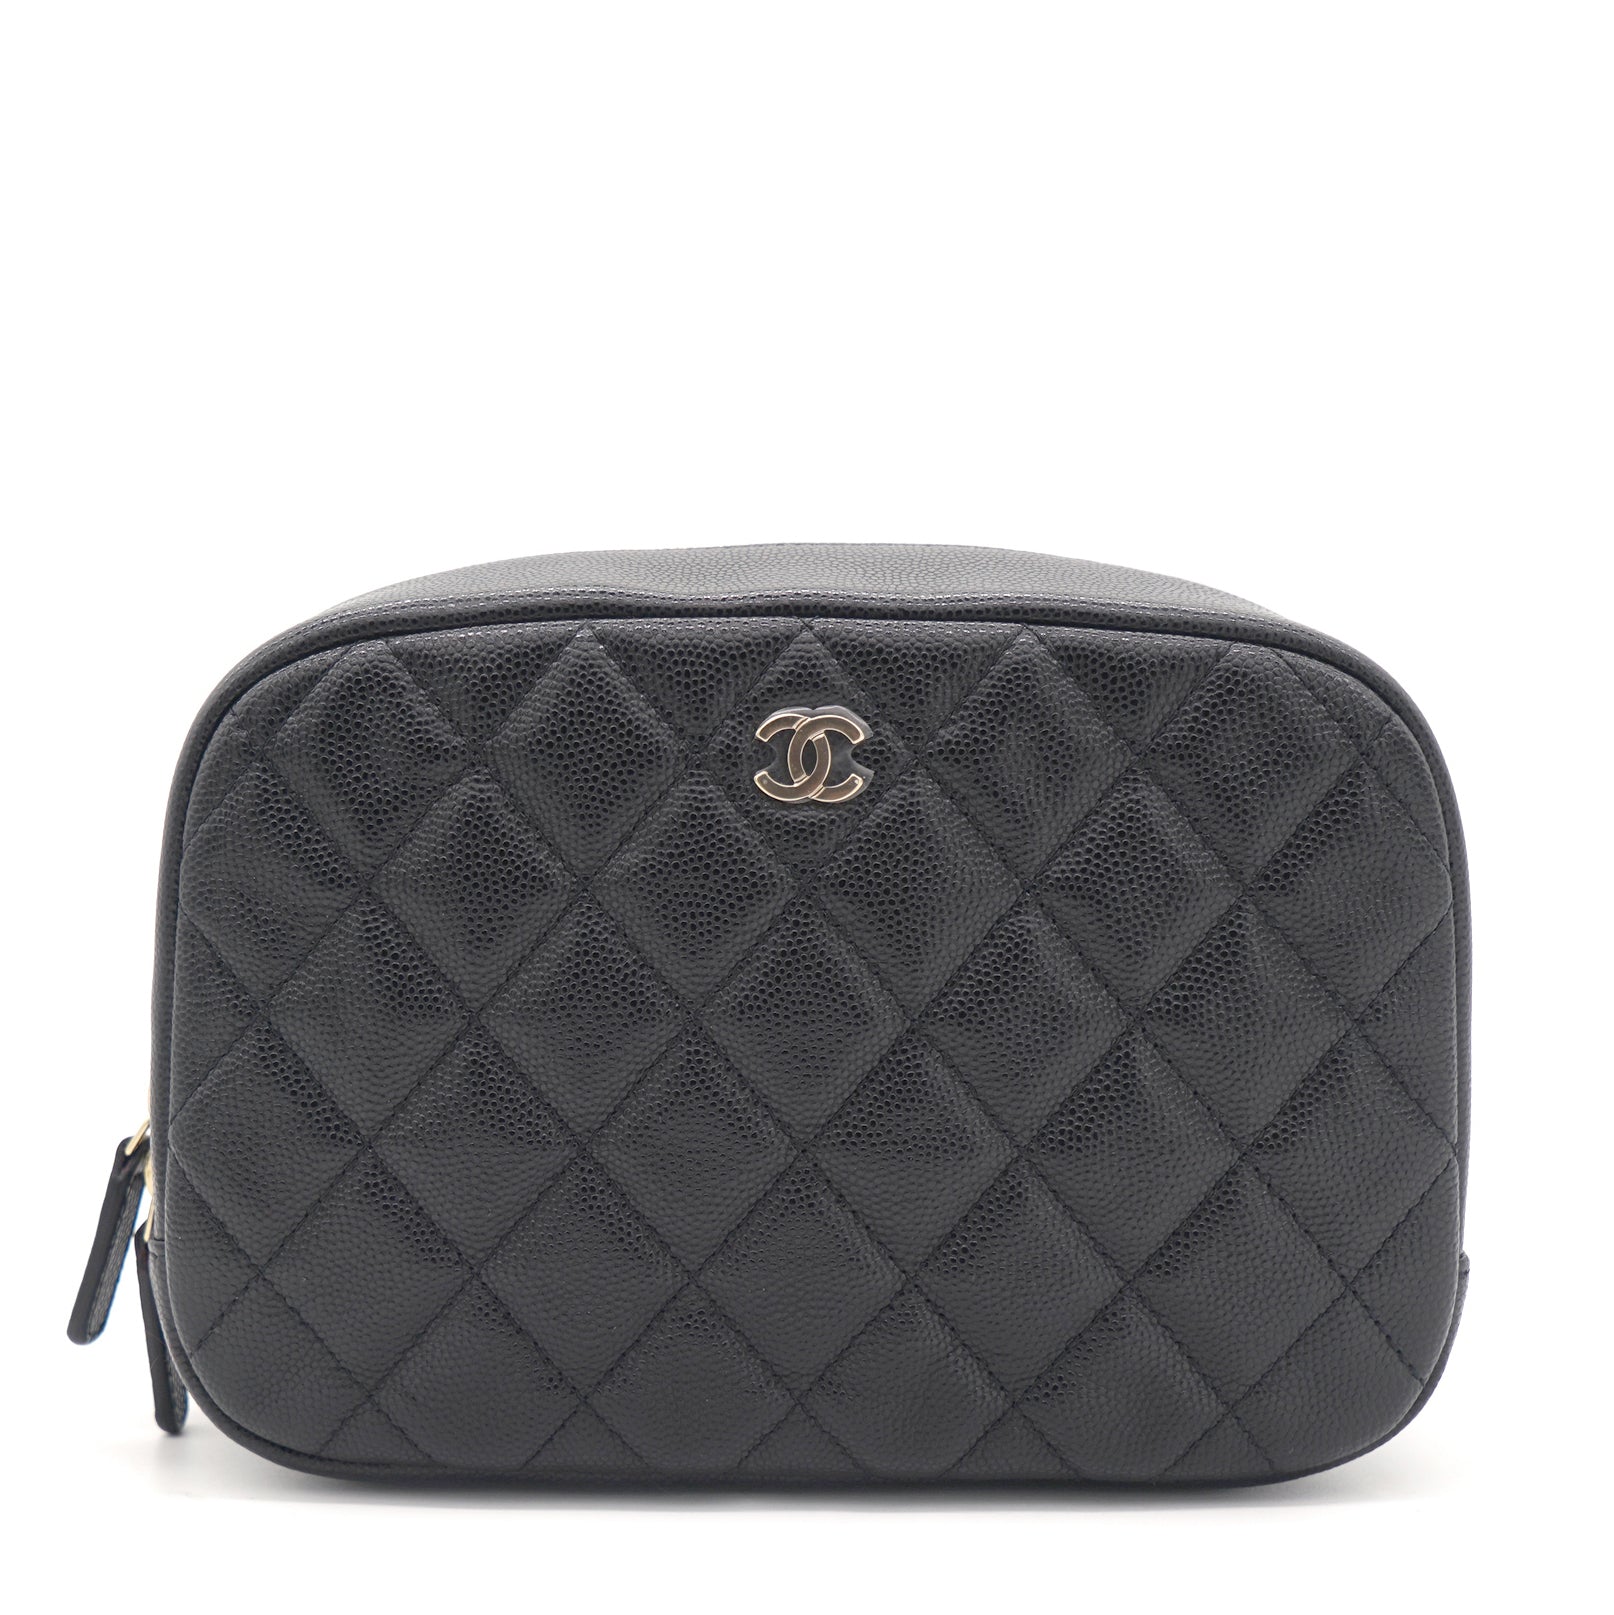 Black Chanel Medium Curvy Cosmetic Pouch – Designer Revival